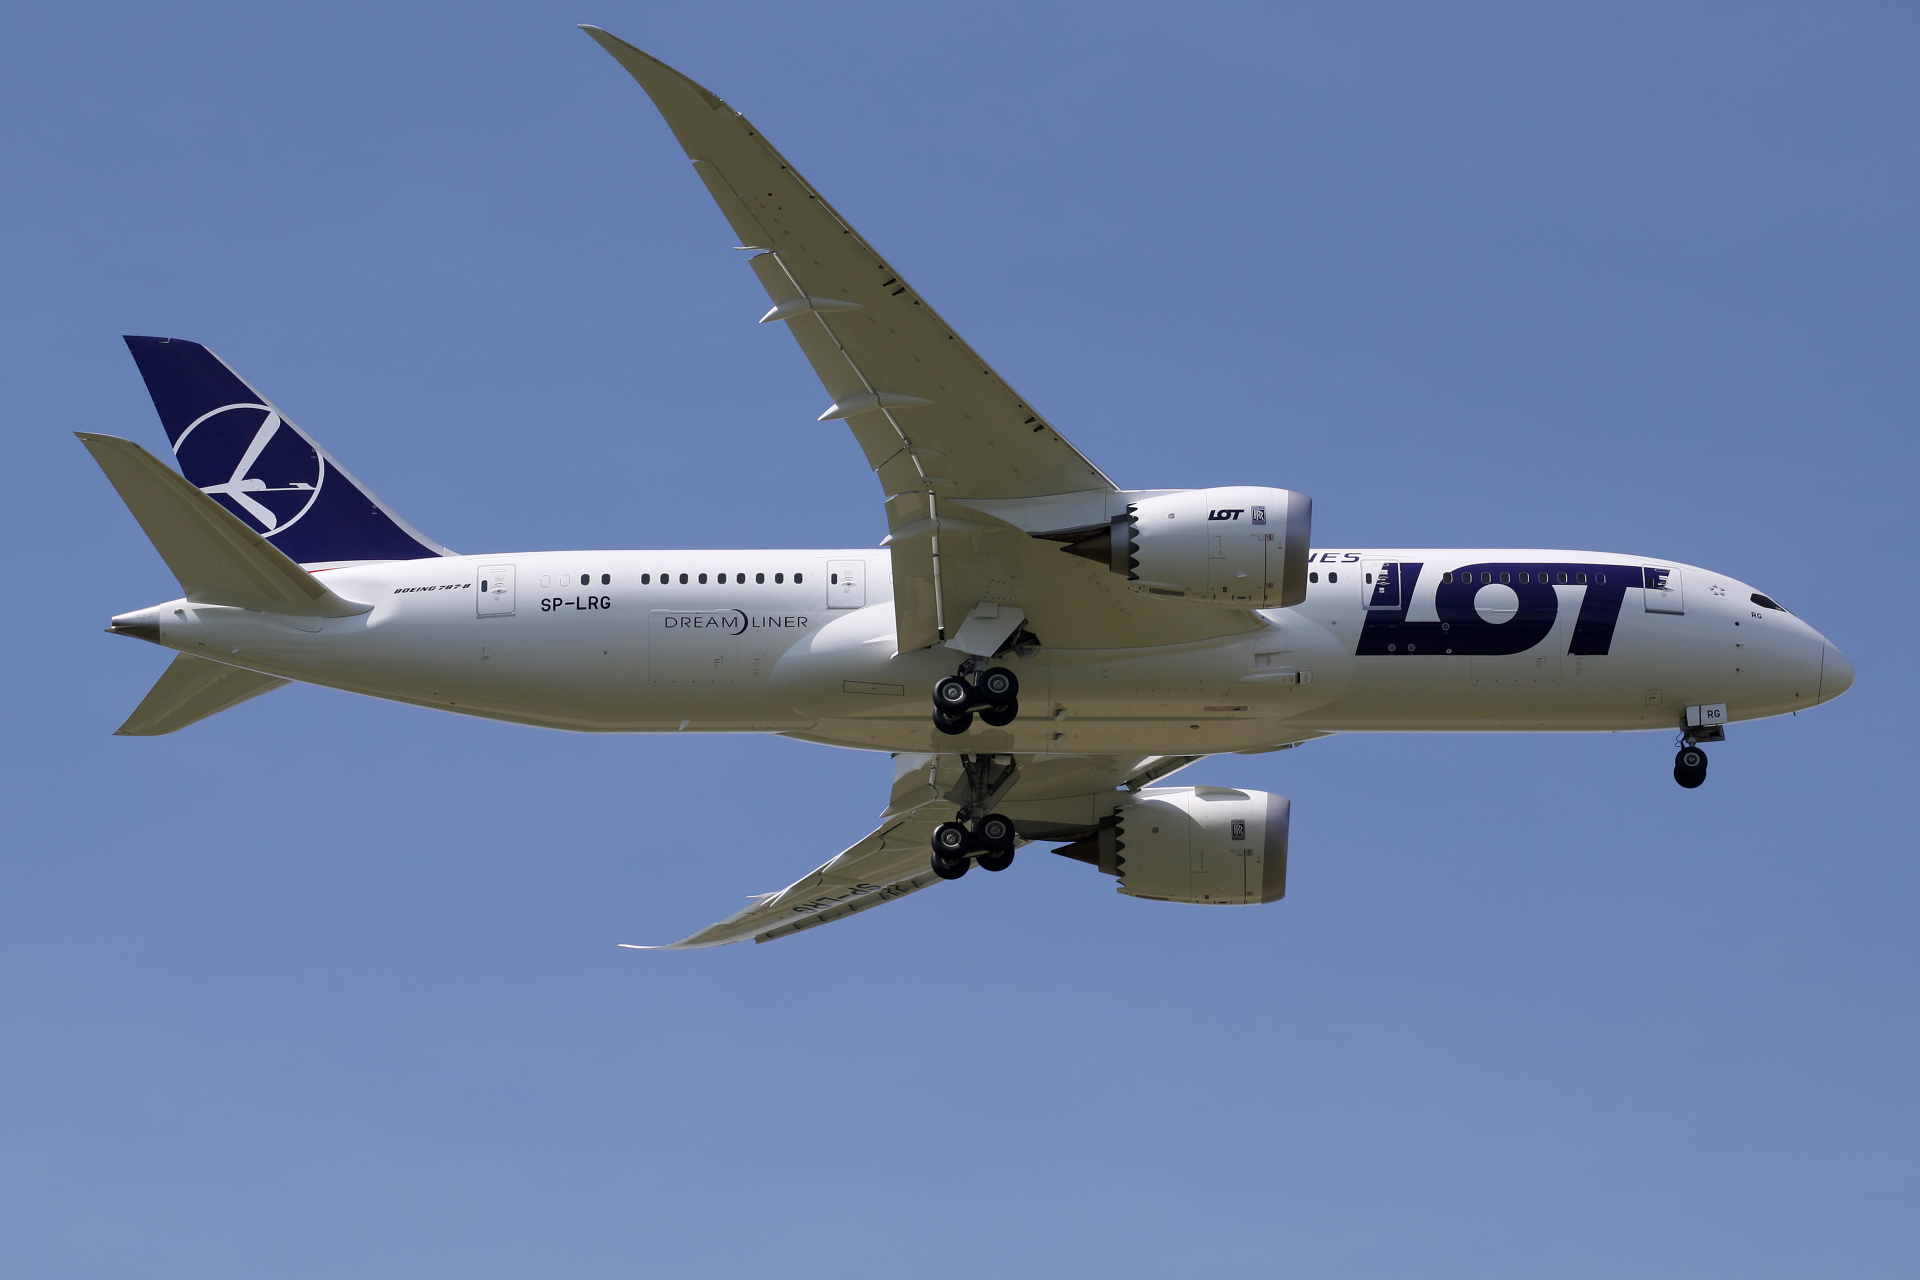 SP-LRG (Aircraft » EPWA Spotting » Boeing 787-8 Dreamliner » LOT Polish Airlines)